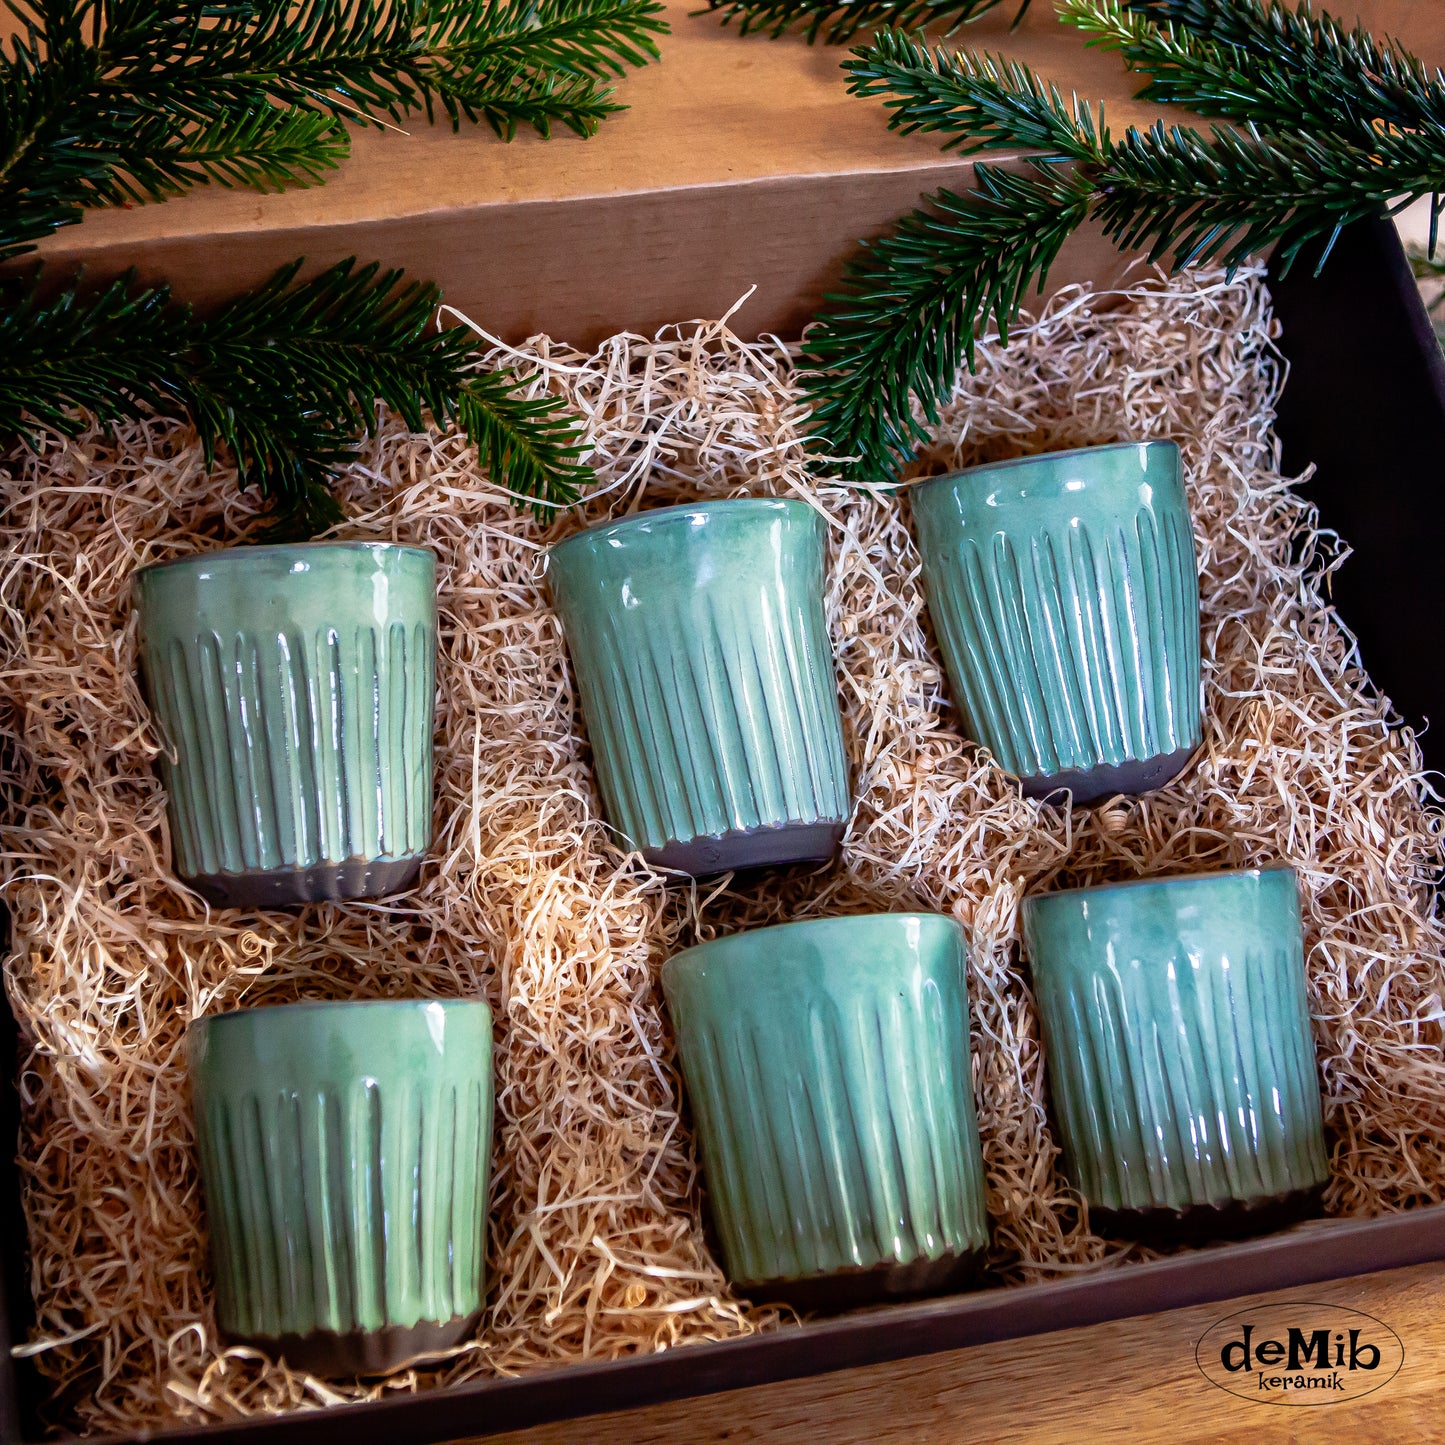 6 Green Mugs - in nice gift box